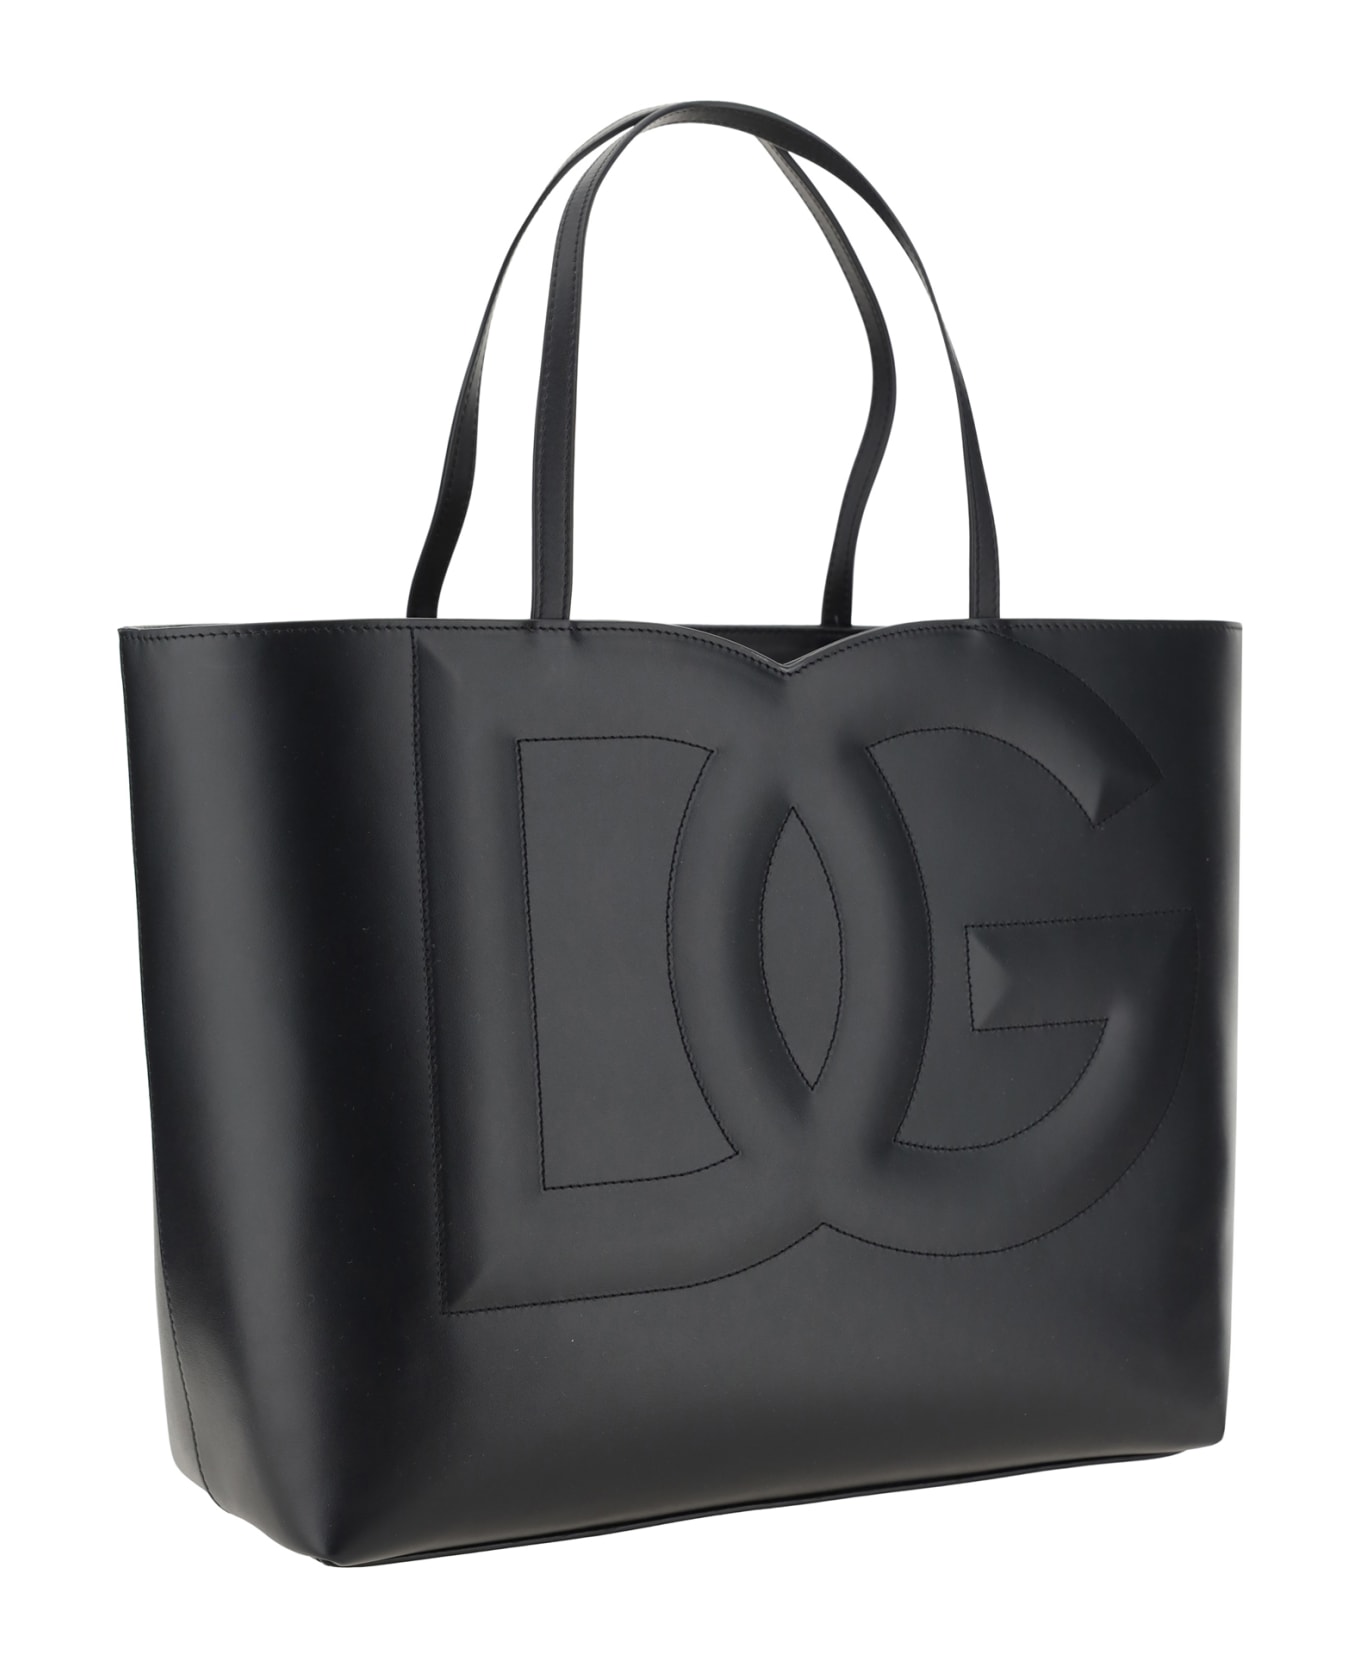 Dolce & Gabbana Shopping Bag - Black